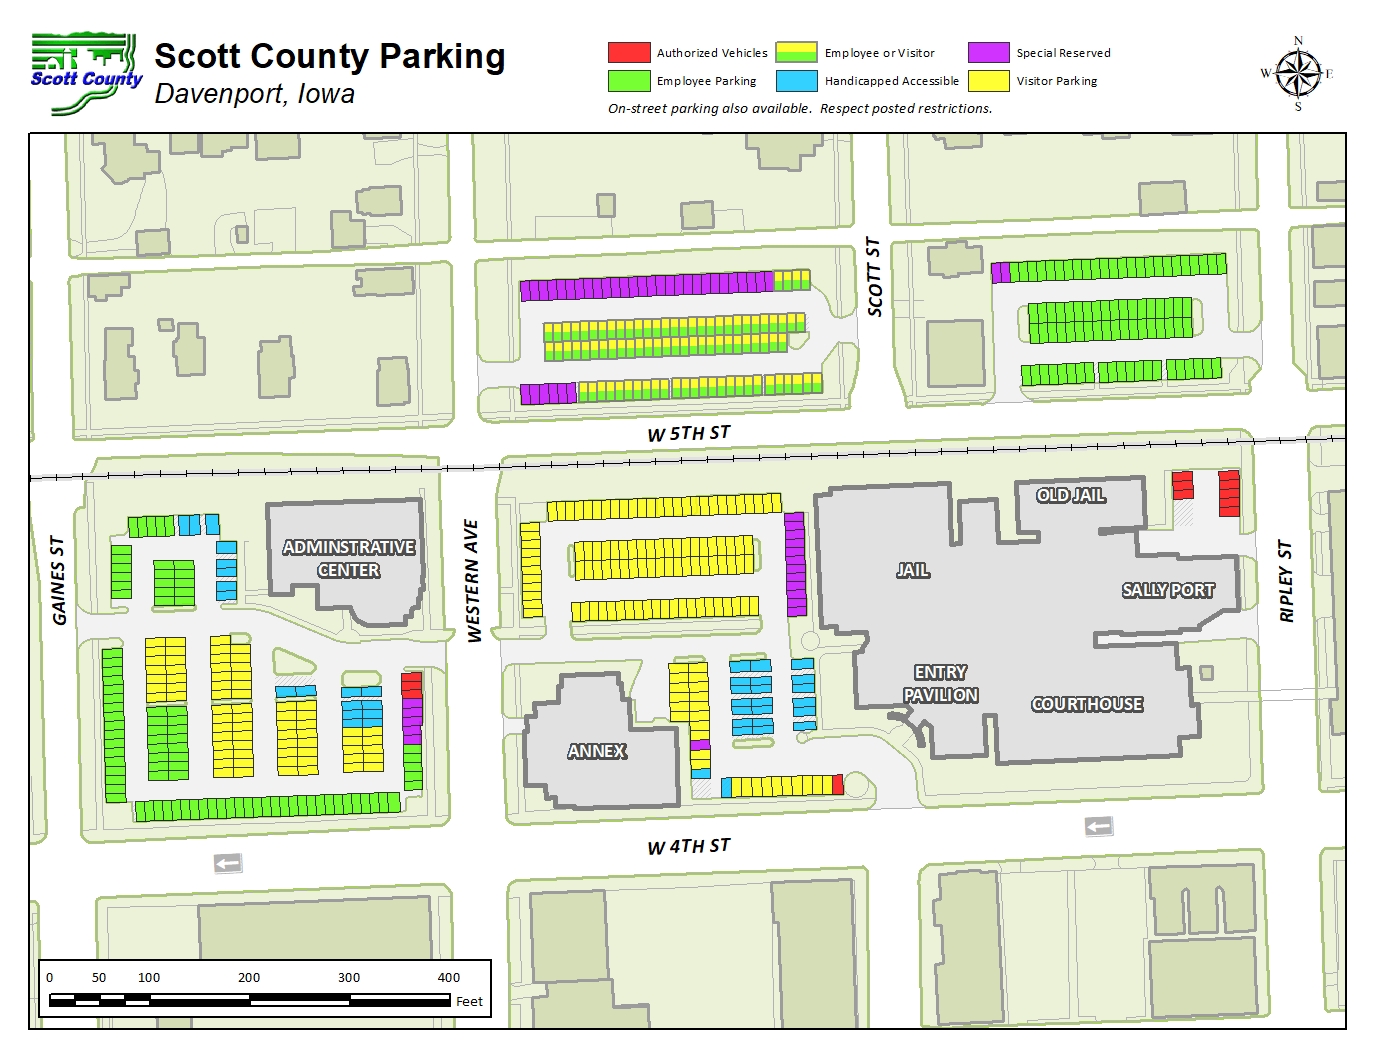 Scott County Iowa downtown campus parking map.